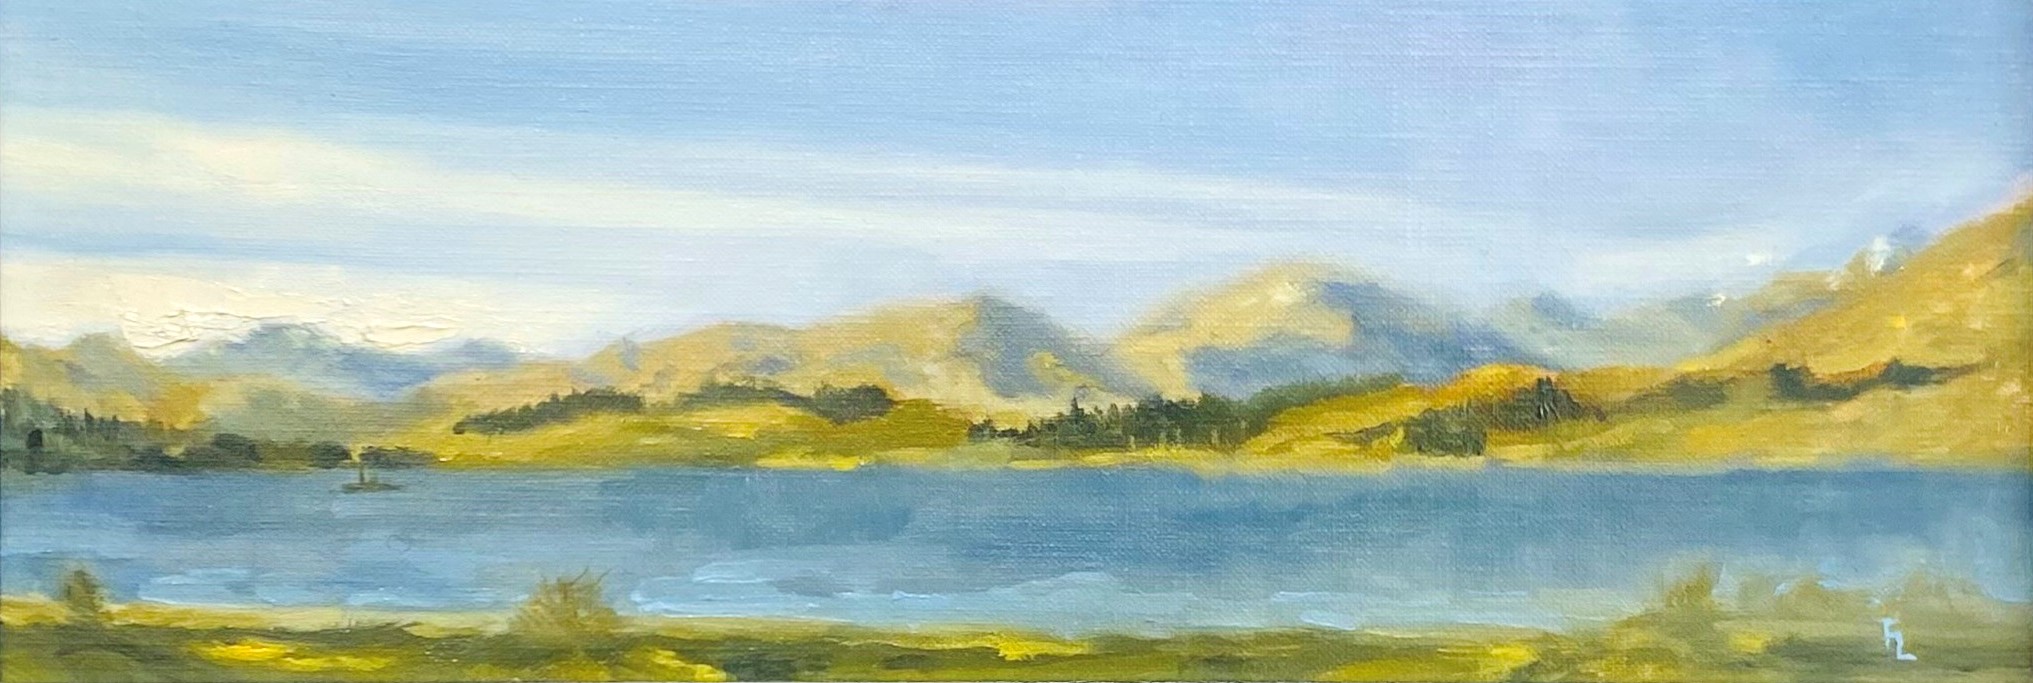 'Skyline Over Loch Tulla' by artist Fiona Longley